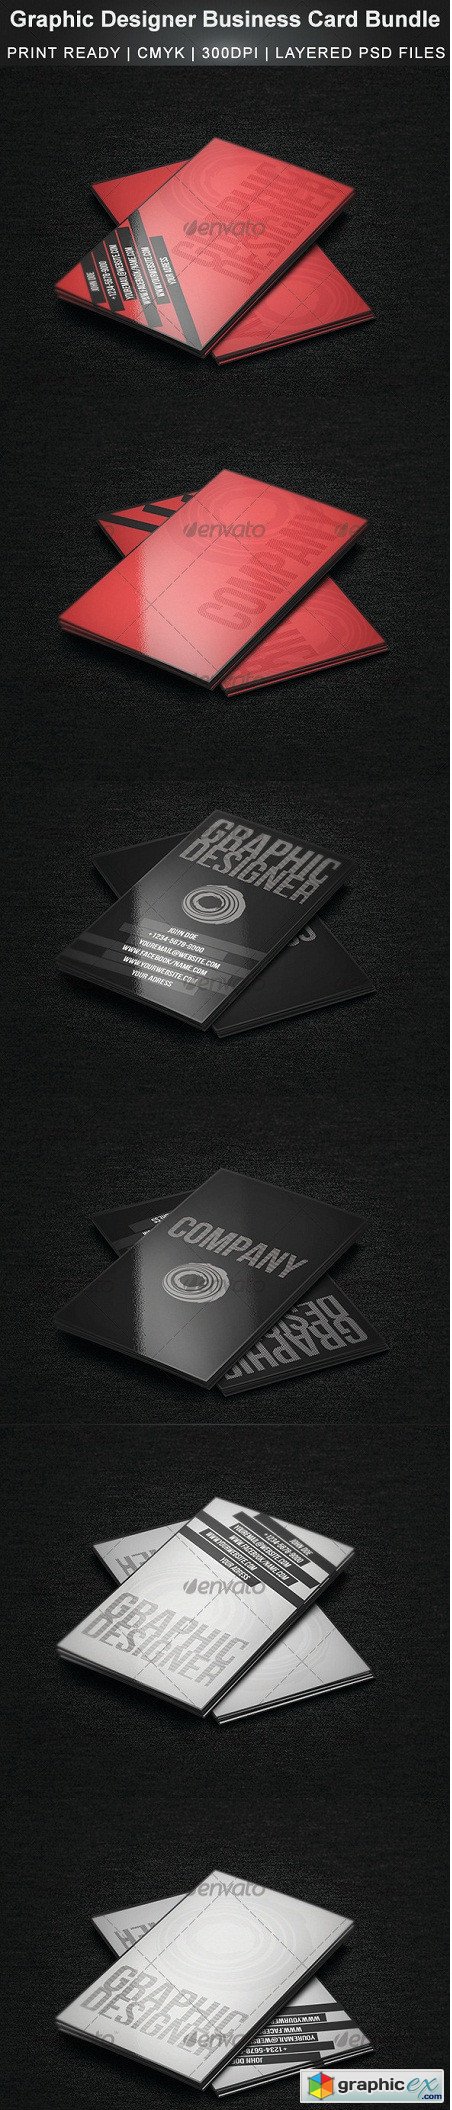 Graphic Designer Business Card Bundle 3575624